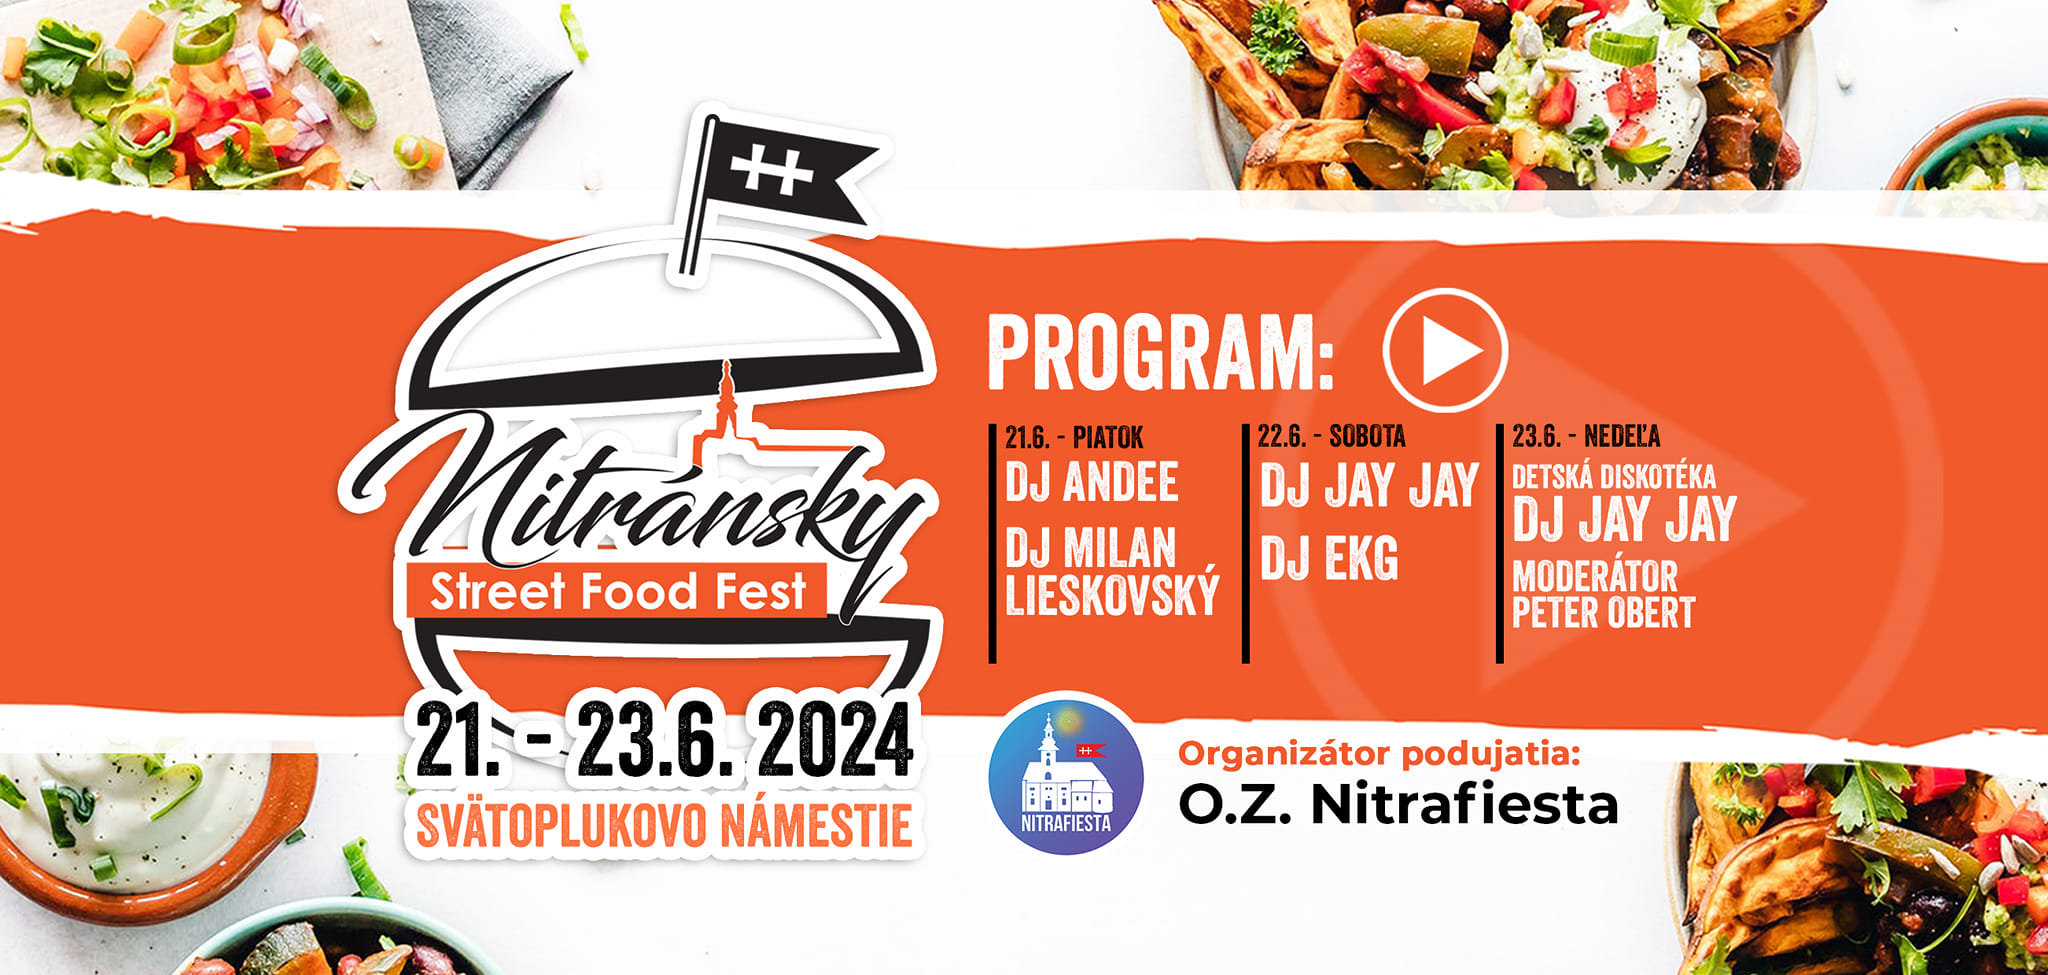 Nitrnsky Street Food Fest 2024 Nitra - 5. ronk